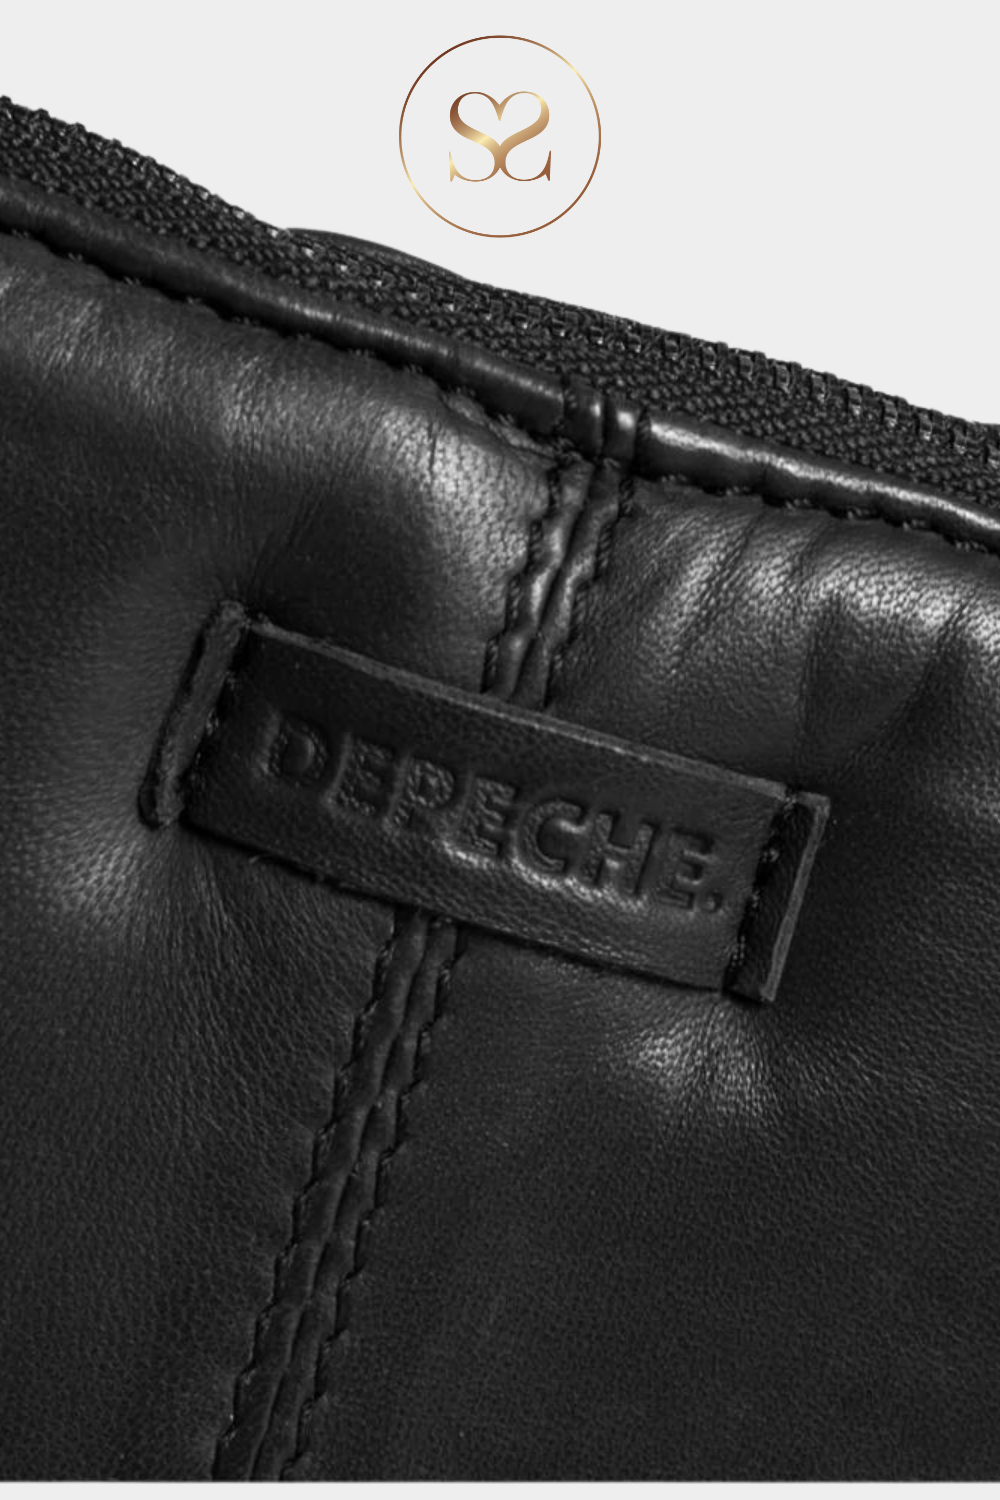 DEPECHE 15288 BLACK CLUTCH / CROSSBODY BAG